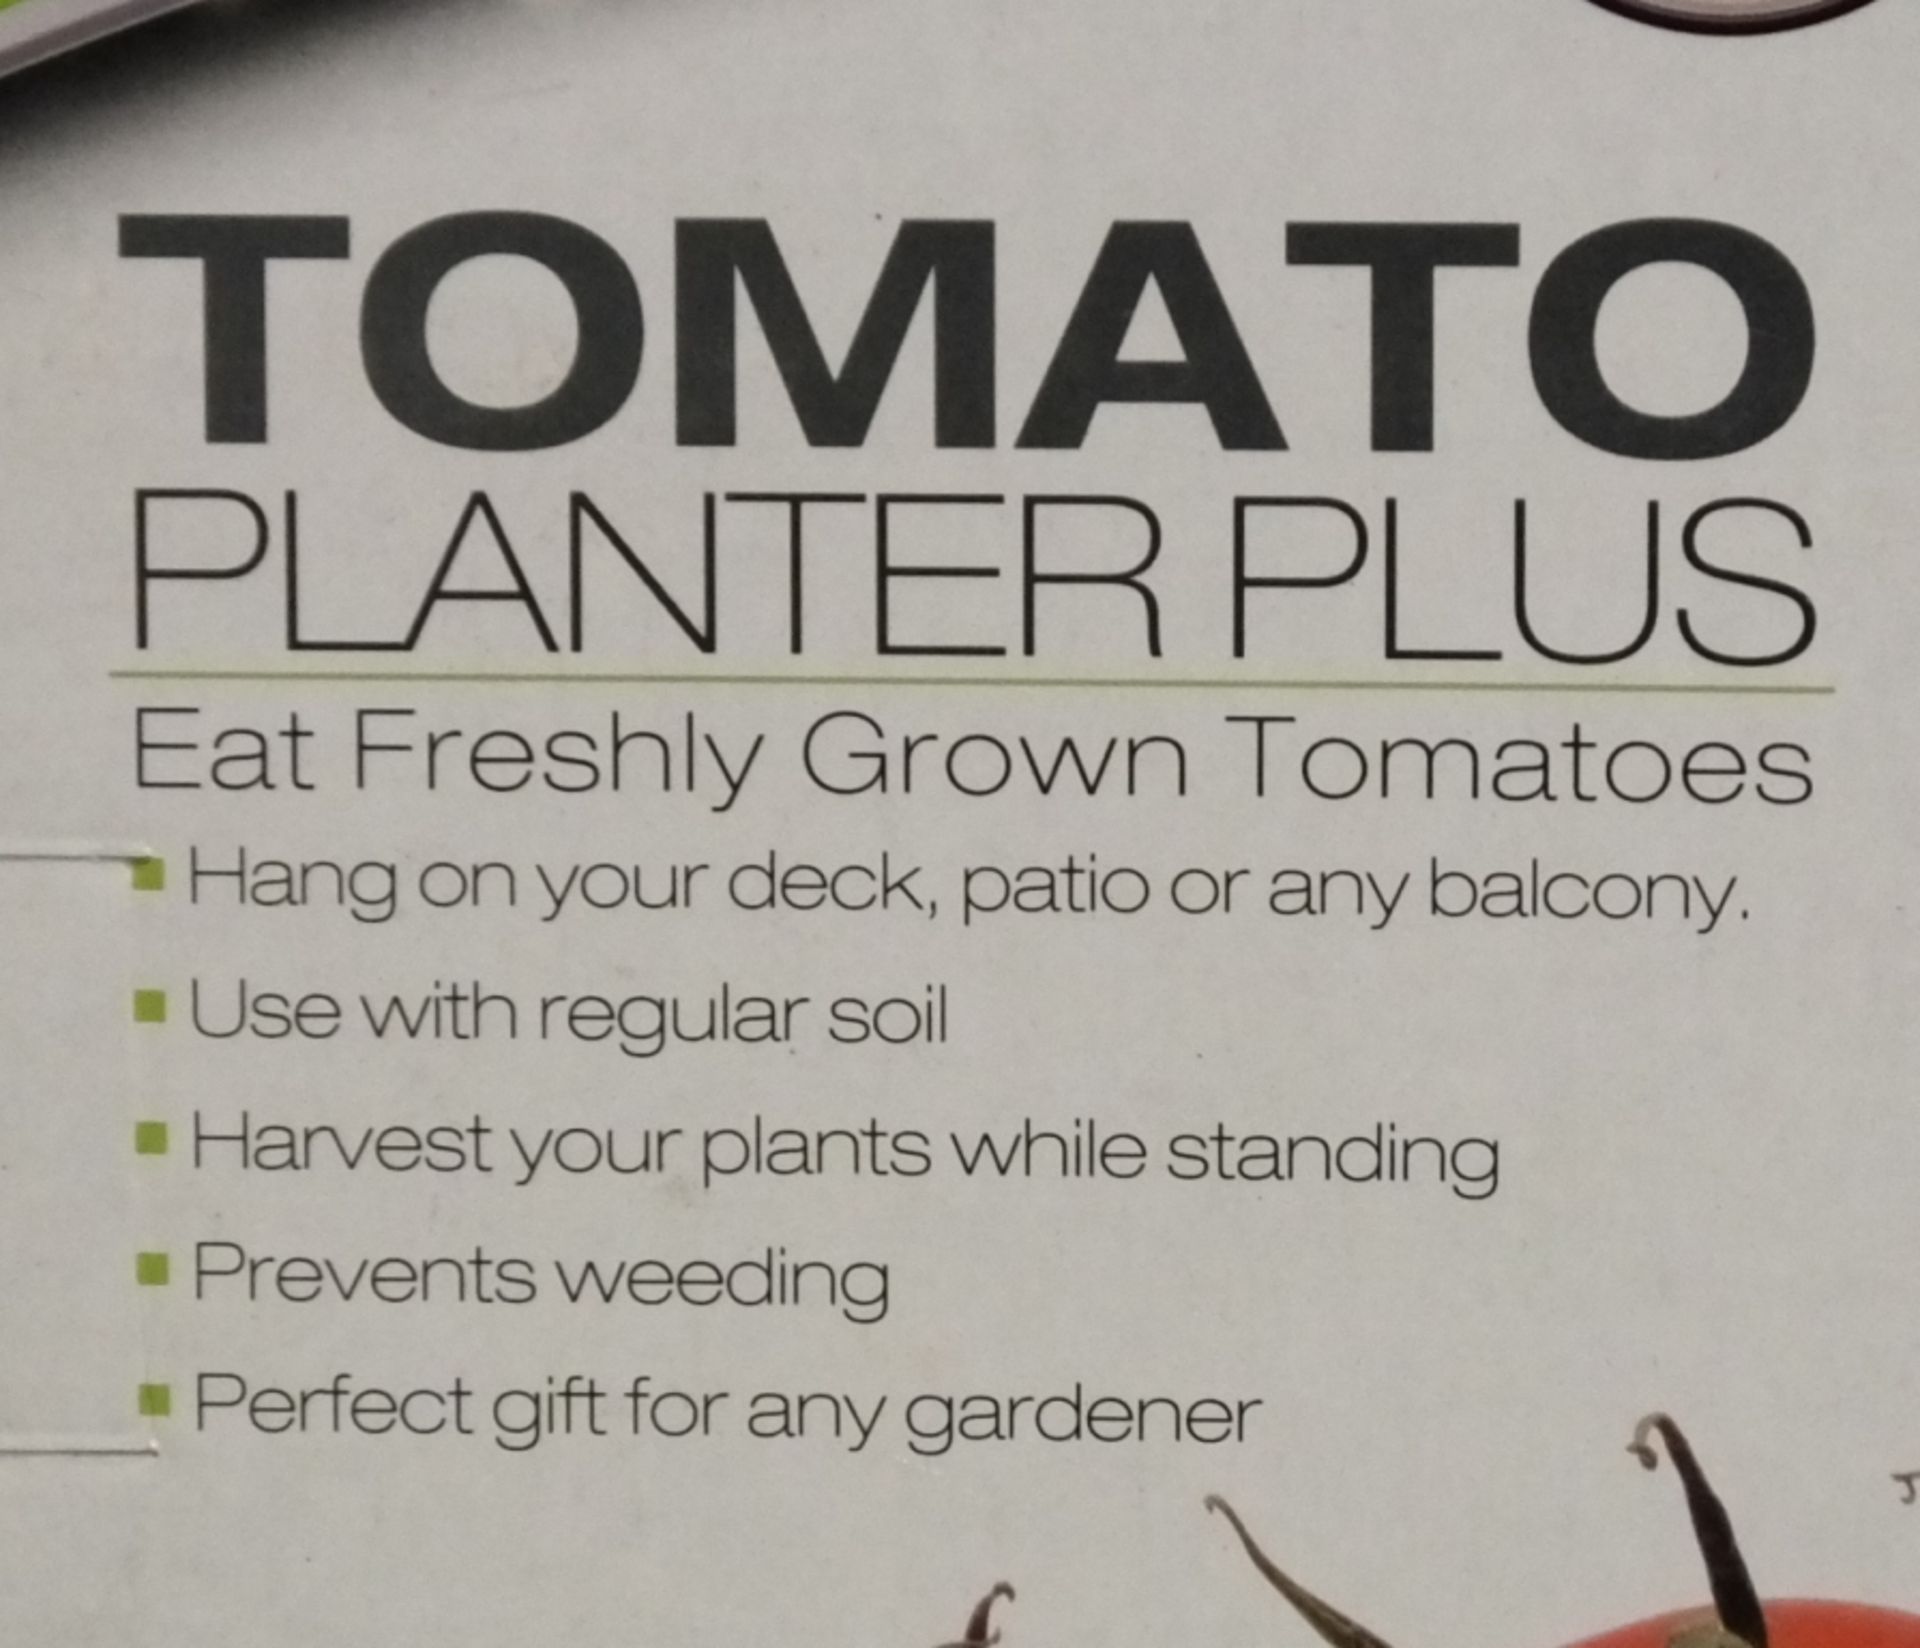 6x TV Experts Tomato Planter Plus tomato growers - Image 2 of 2